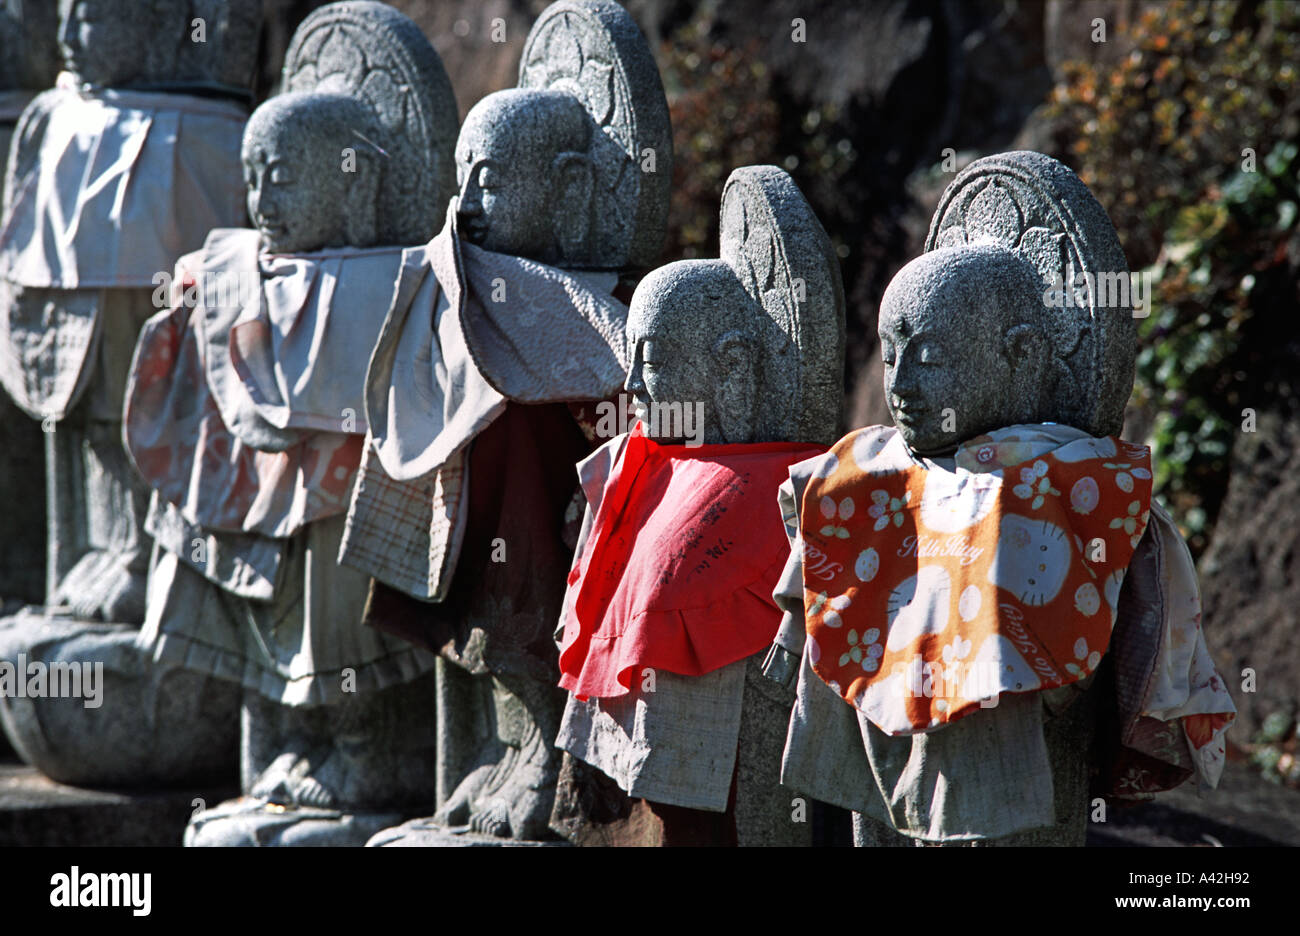 Stone carved mizo Jizo statues clothed in fabric bibs at Tsubosaka dera temple Nara prefecture Japan Historic temple Stock Photo